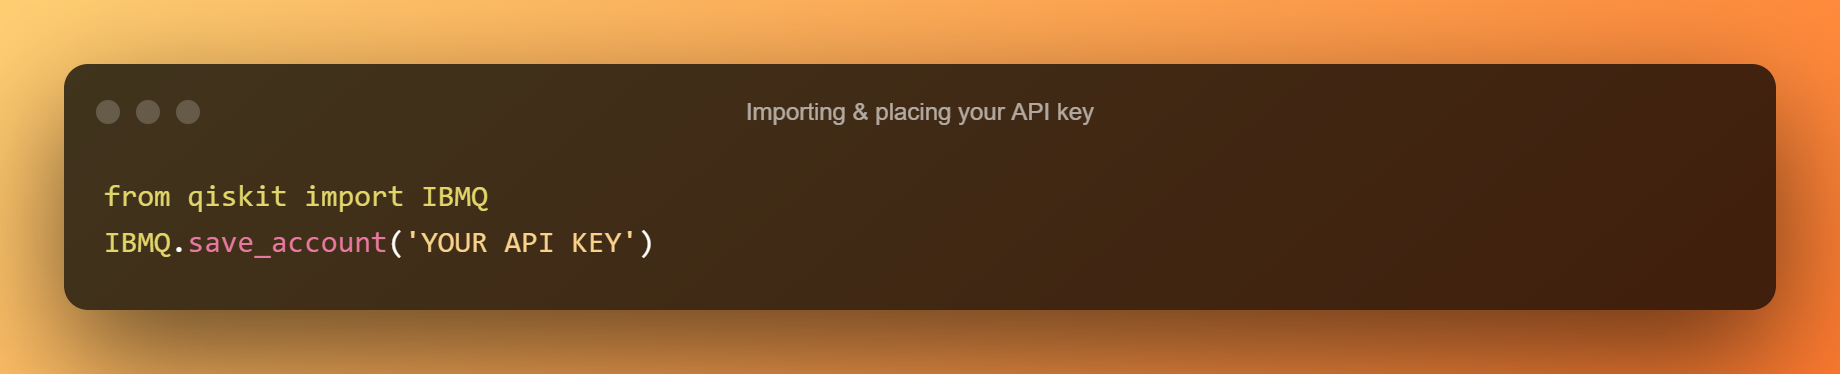 Importing Placing Your API Key